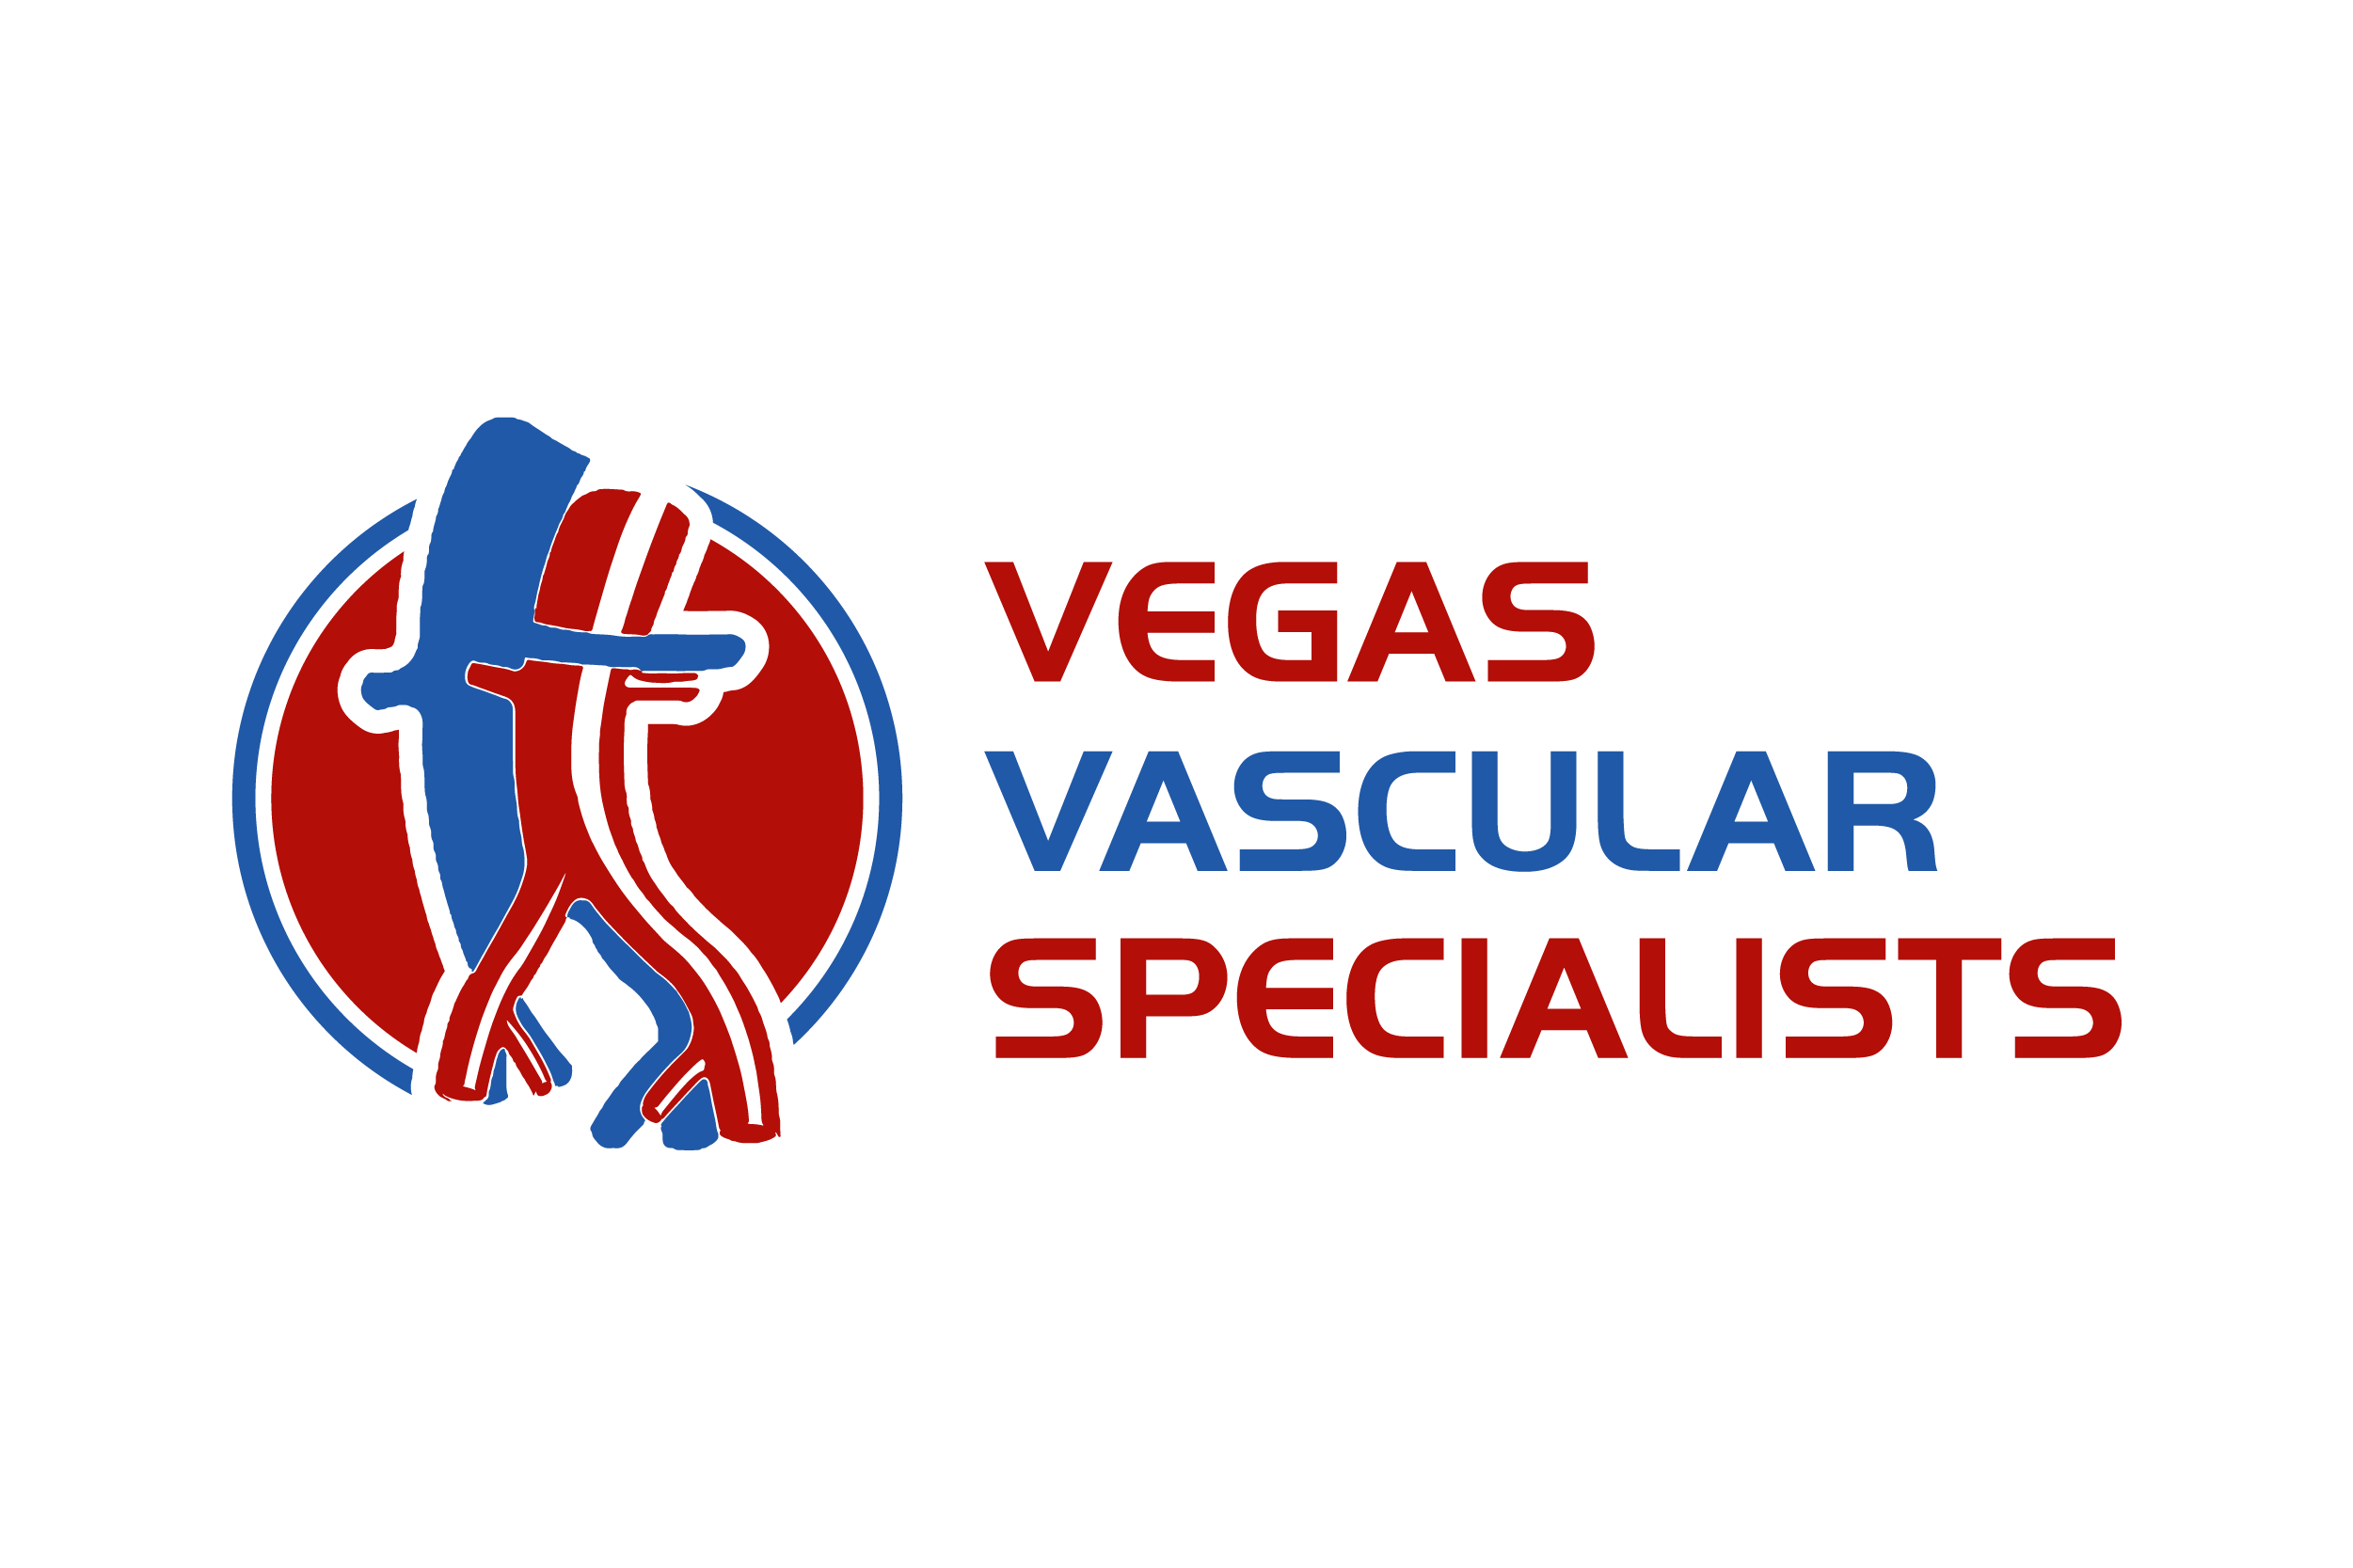 Vegas Vascular Specialists